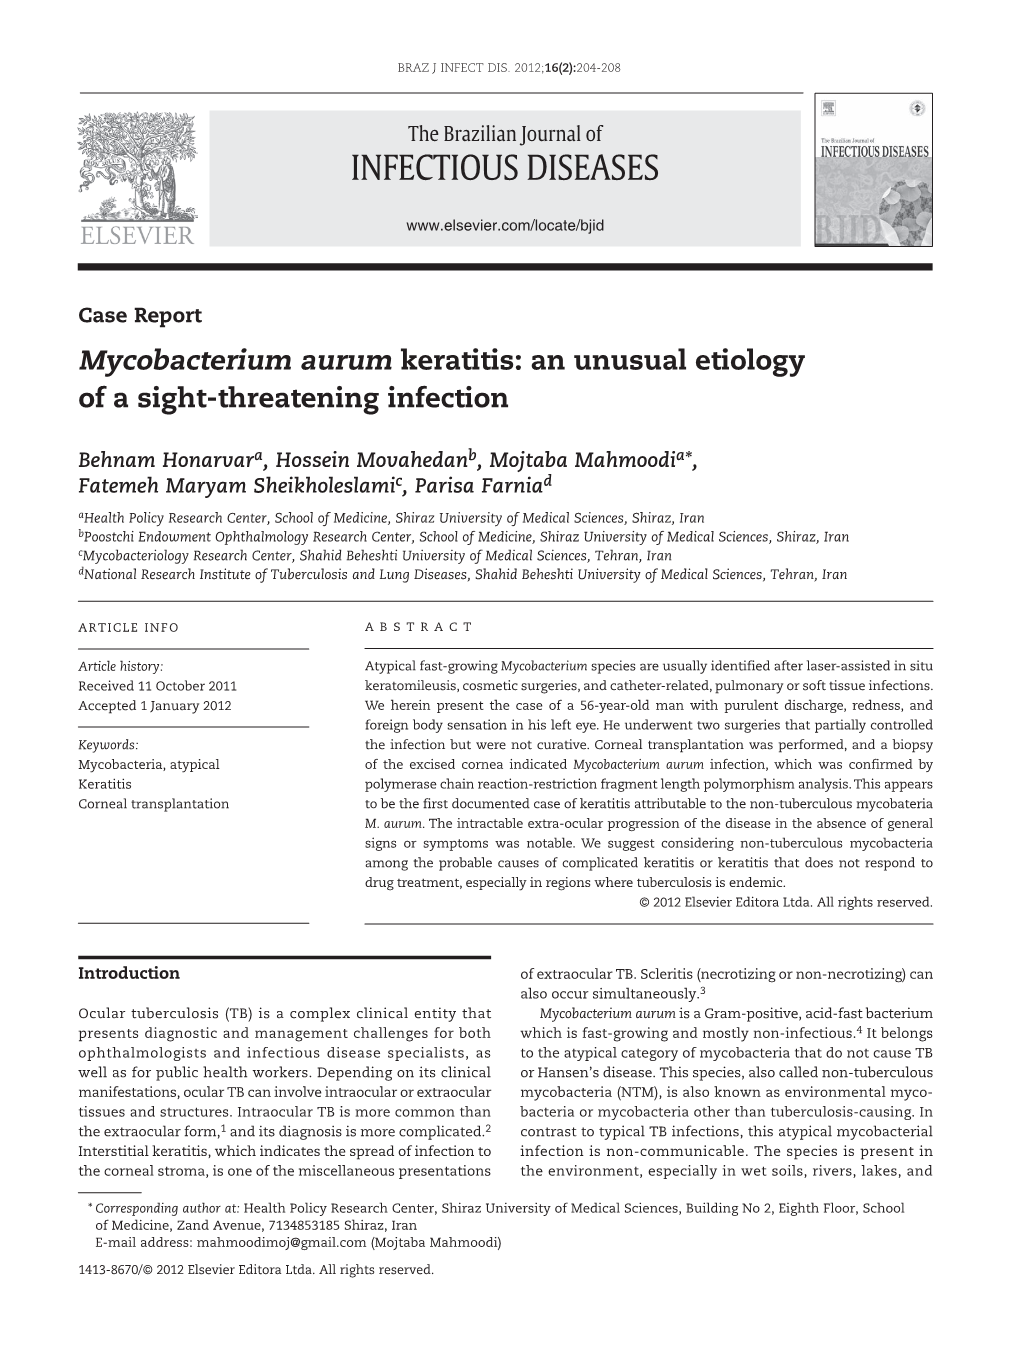 Mycobacterium Aurum Keratitis: an Unusual Etiology of a Sight-Threatening Infection